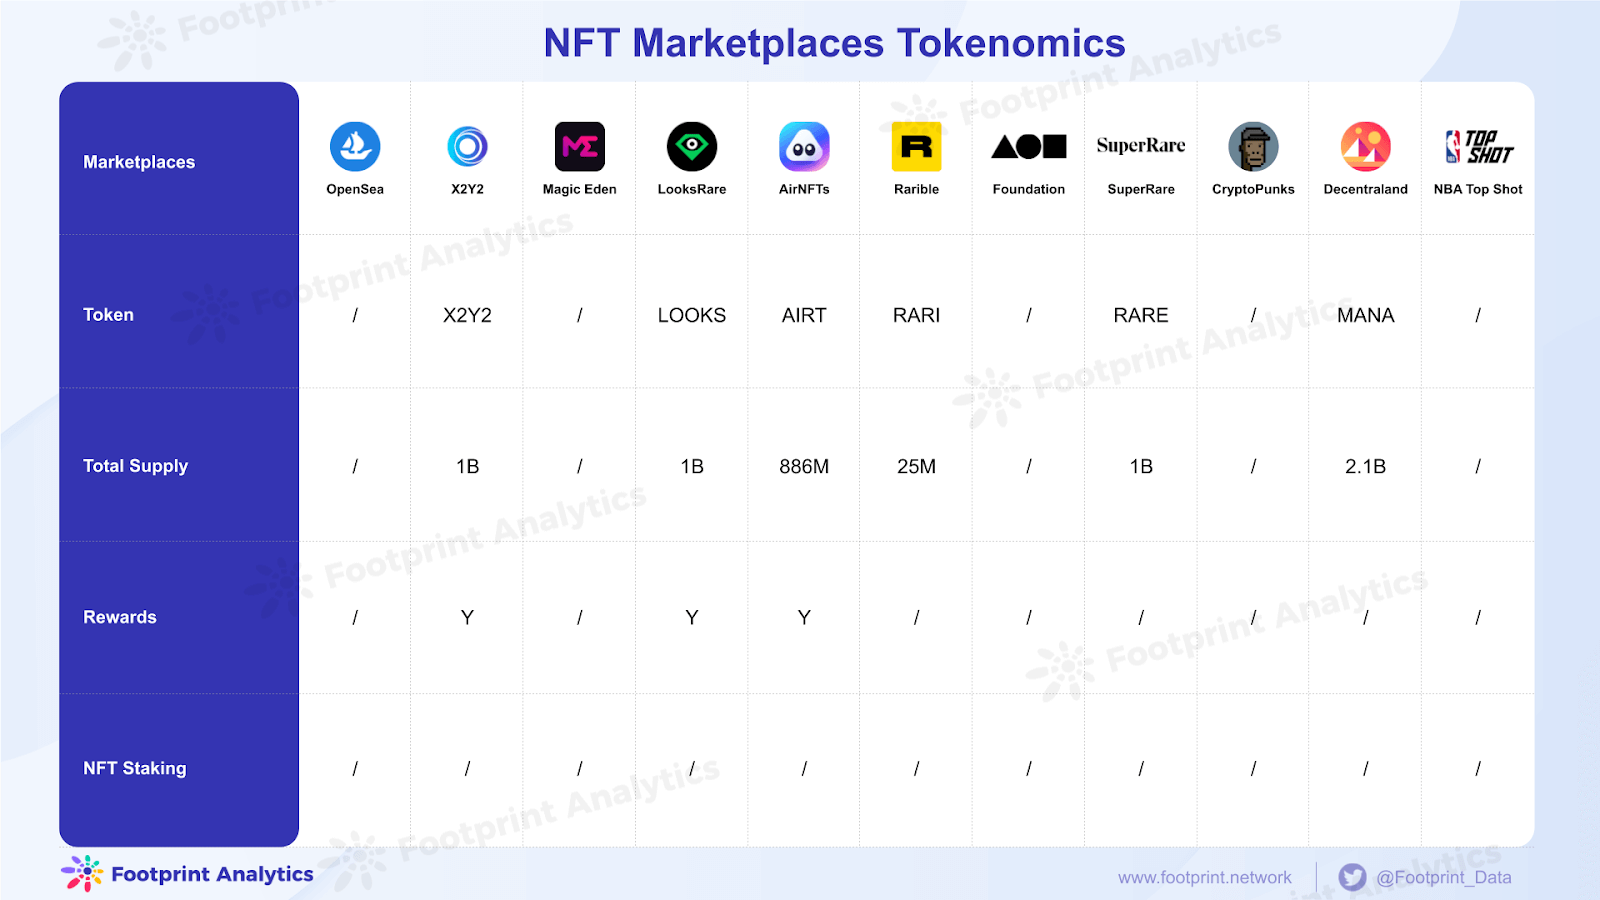 Footprint Analytics - NFT Marketplace Tokenomics